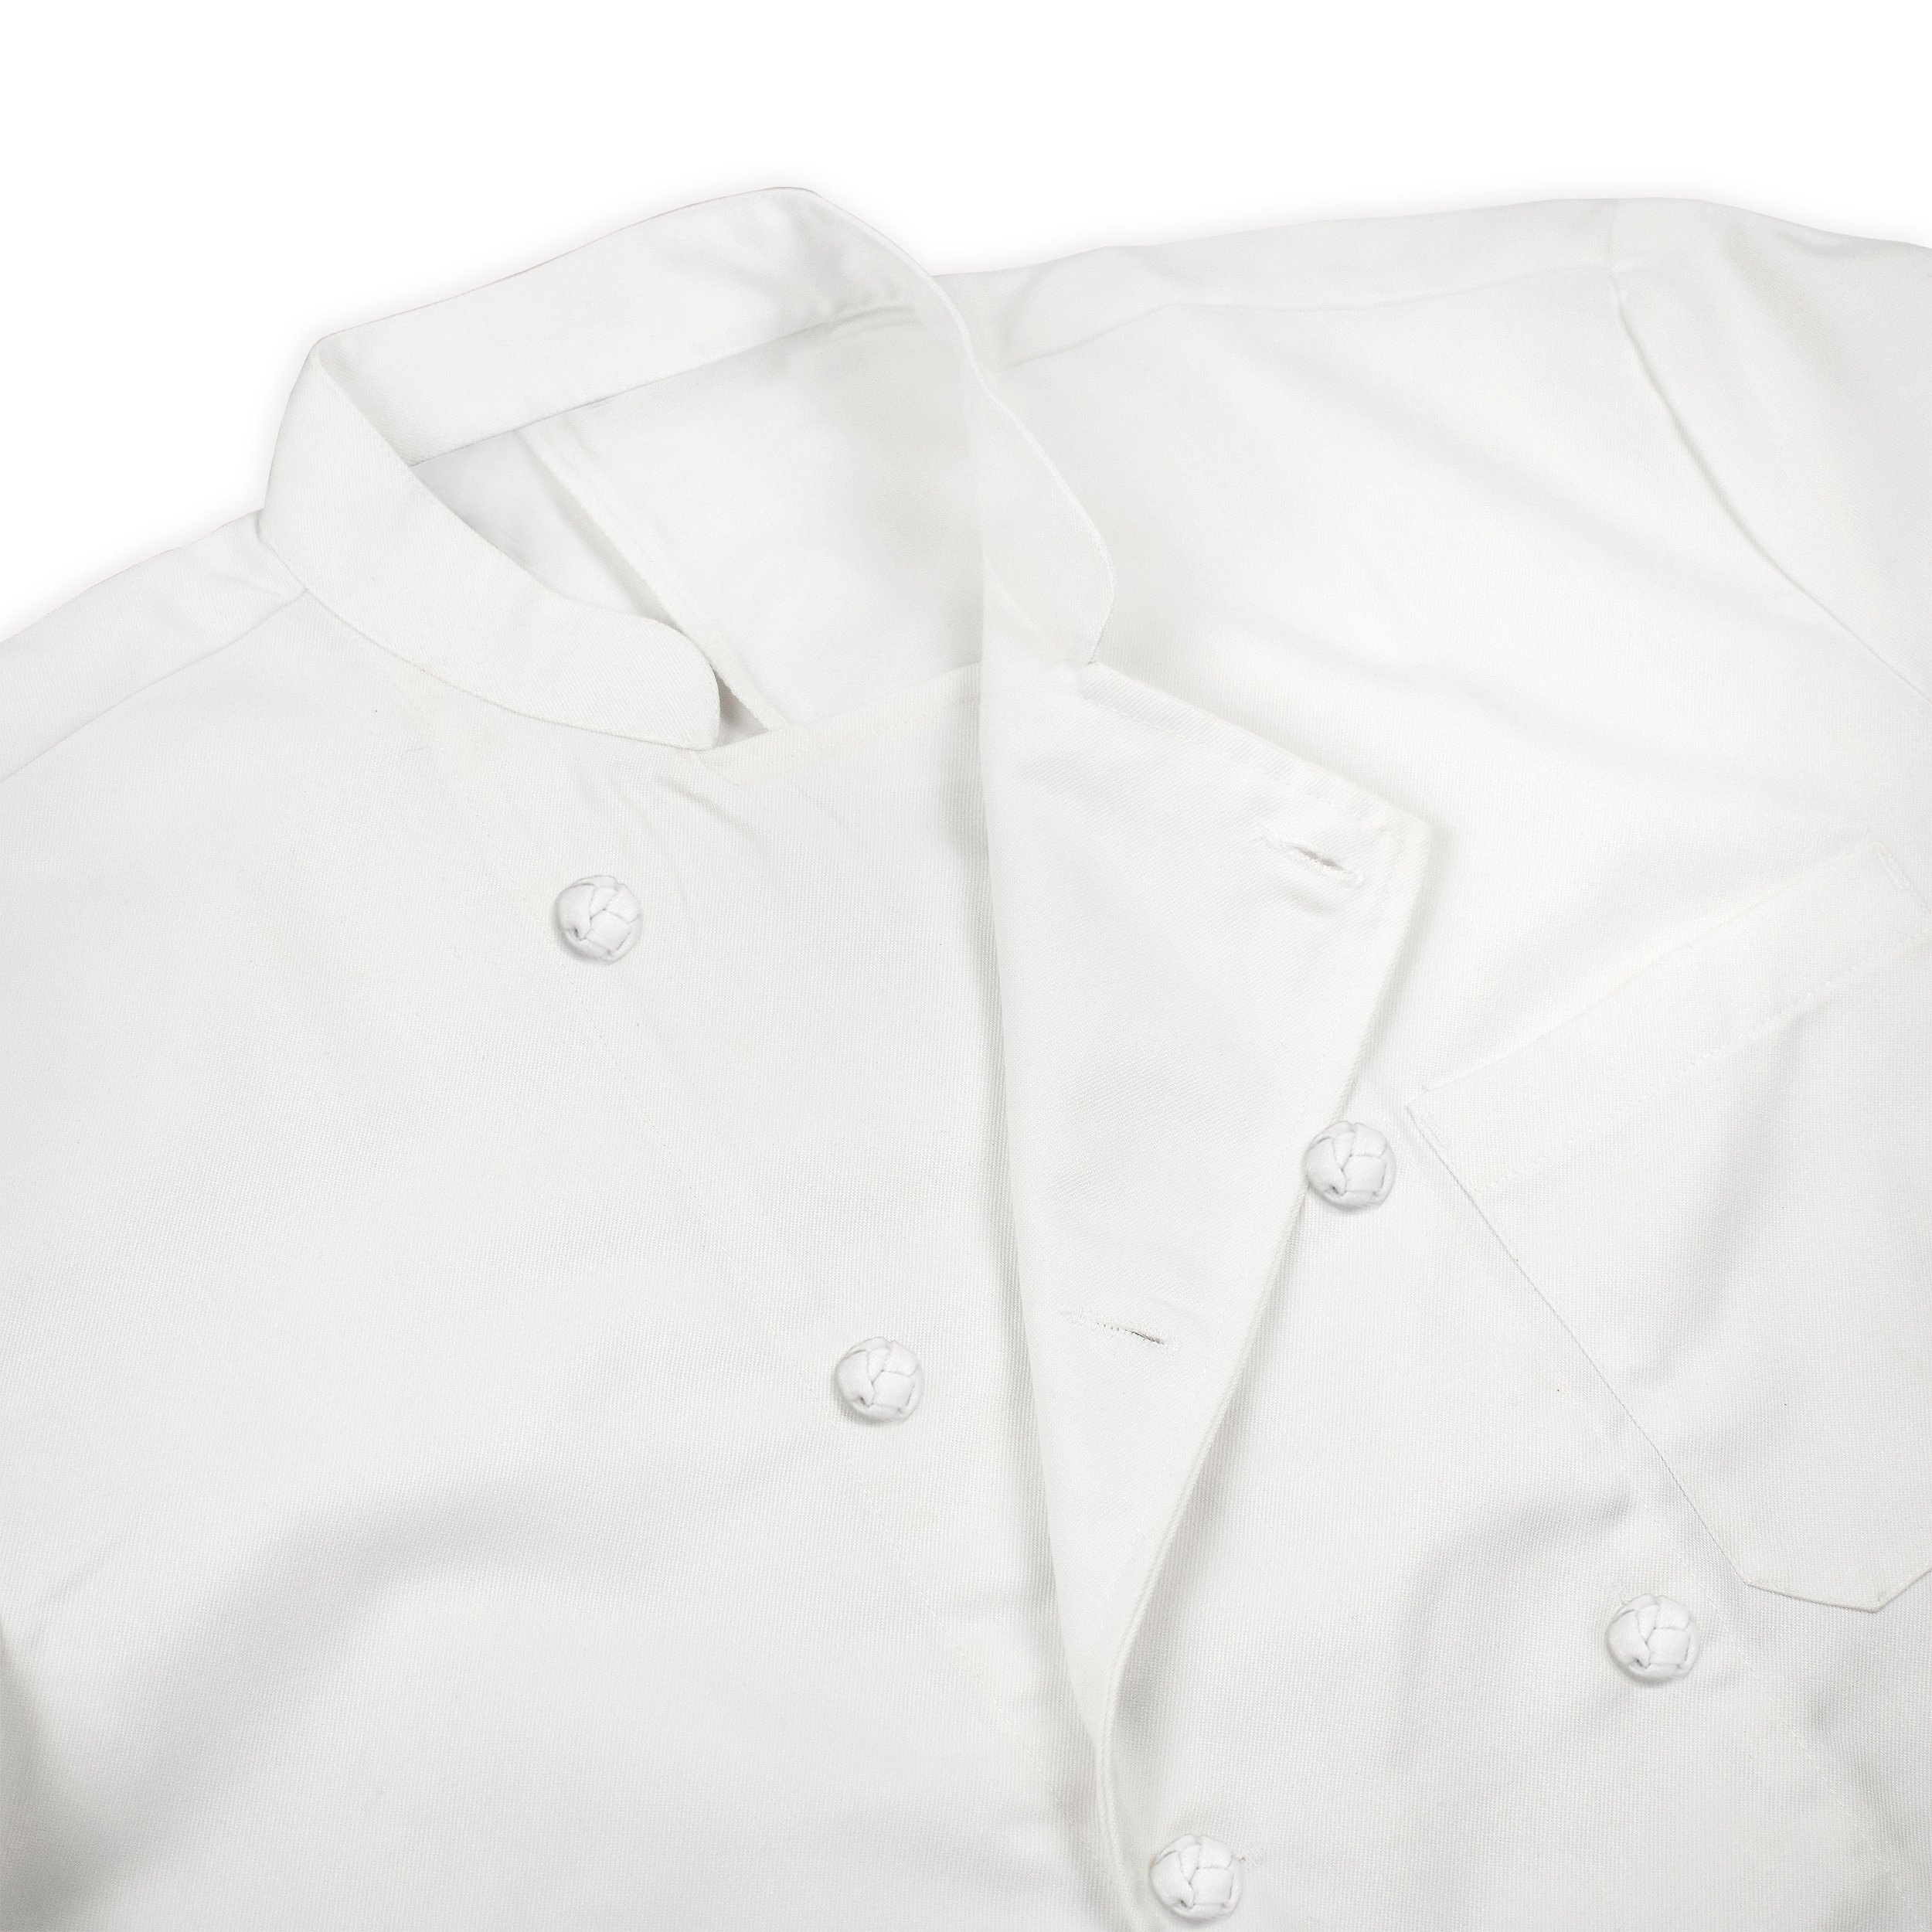 Auguste Chef Coat - Professional Unisex Chef Uniform Jacket | Boldric